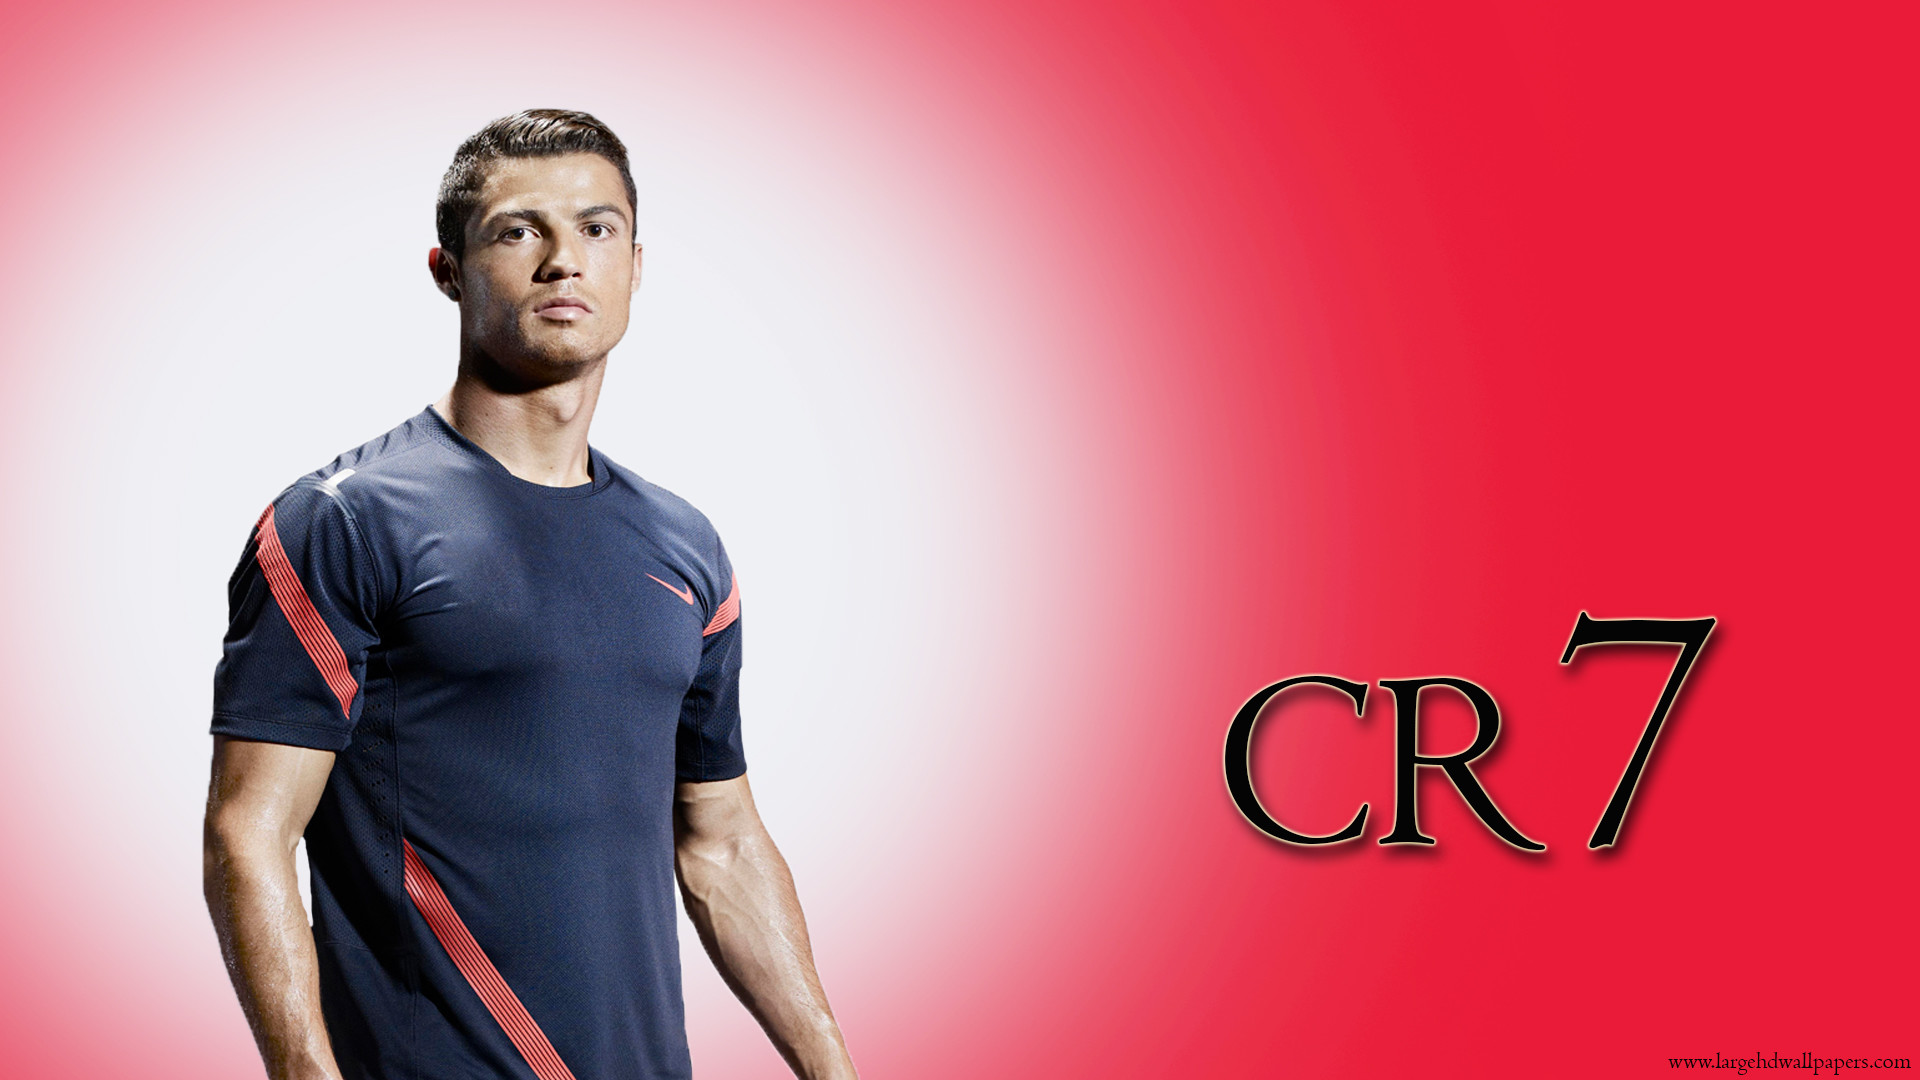 1920x1080 Cristiano Ronaldo CR7 Full HD Images